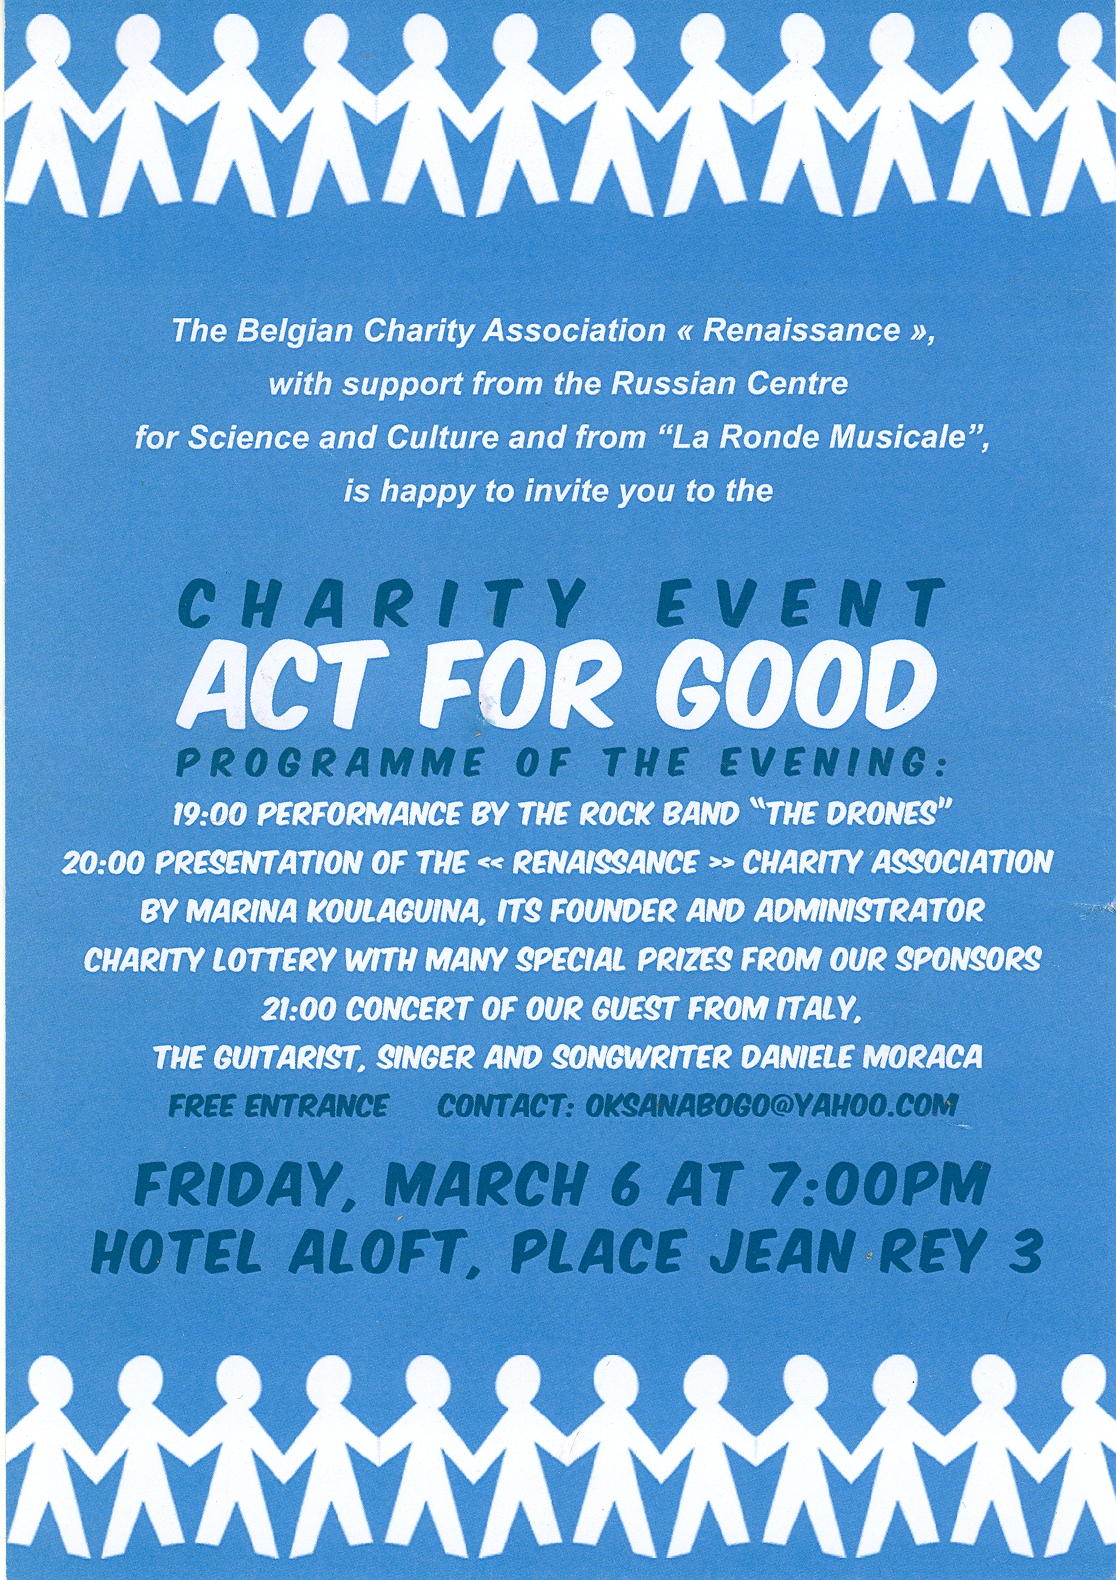 Affiche. Hotel Aloft. Благотворительный вечер « Твори добро ». Charity evening. Act for Good. 01. 2015-03-06